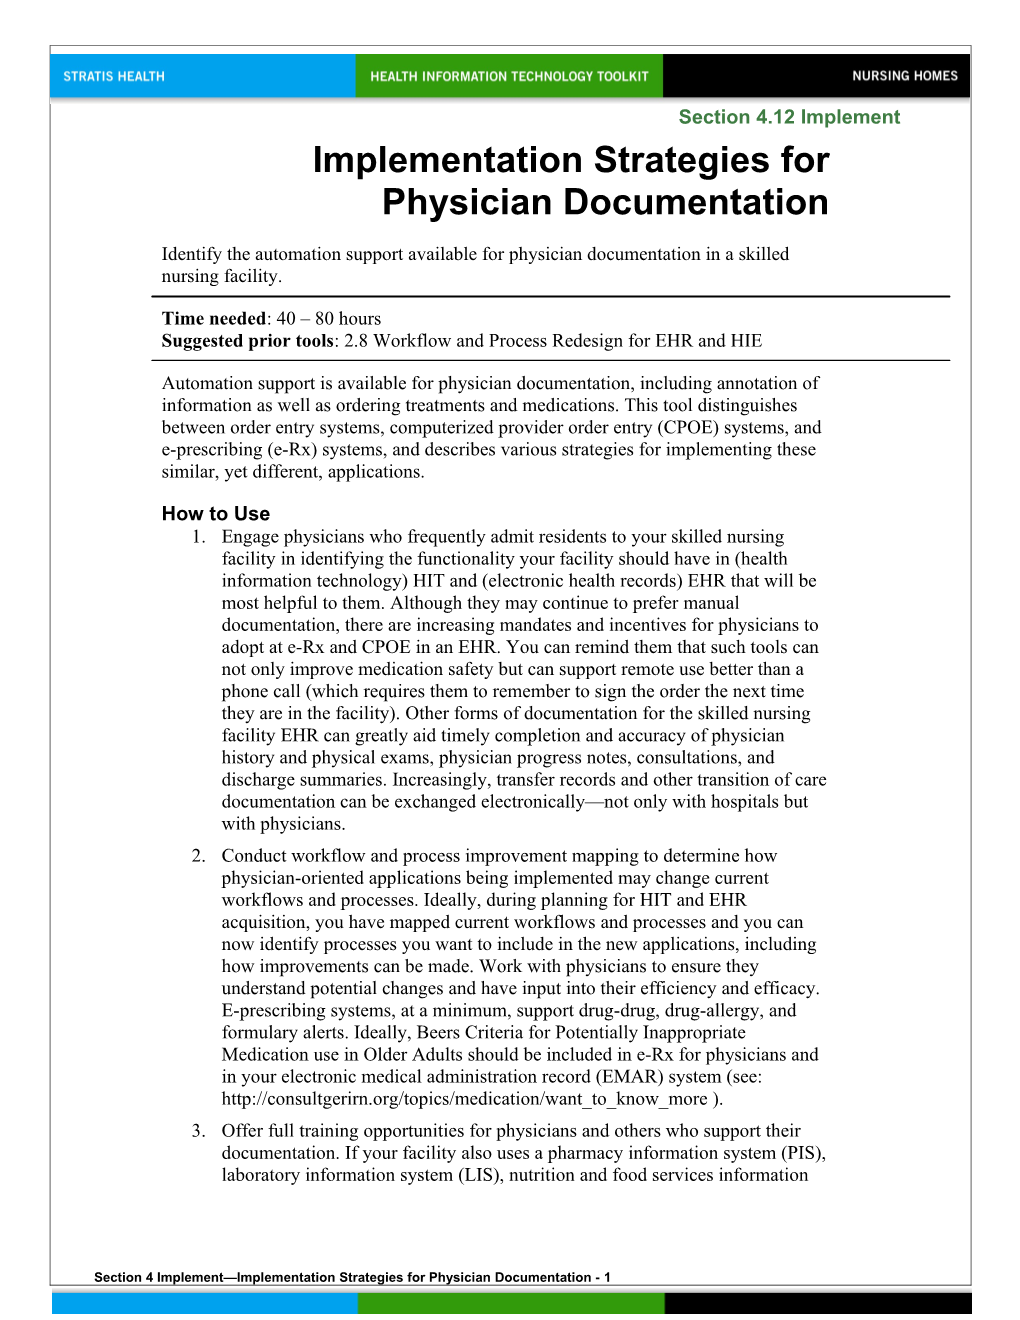 4 Implentation Strategies for Physician Documentation